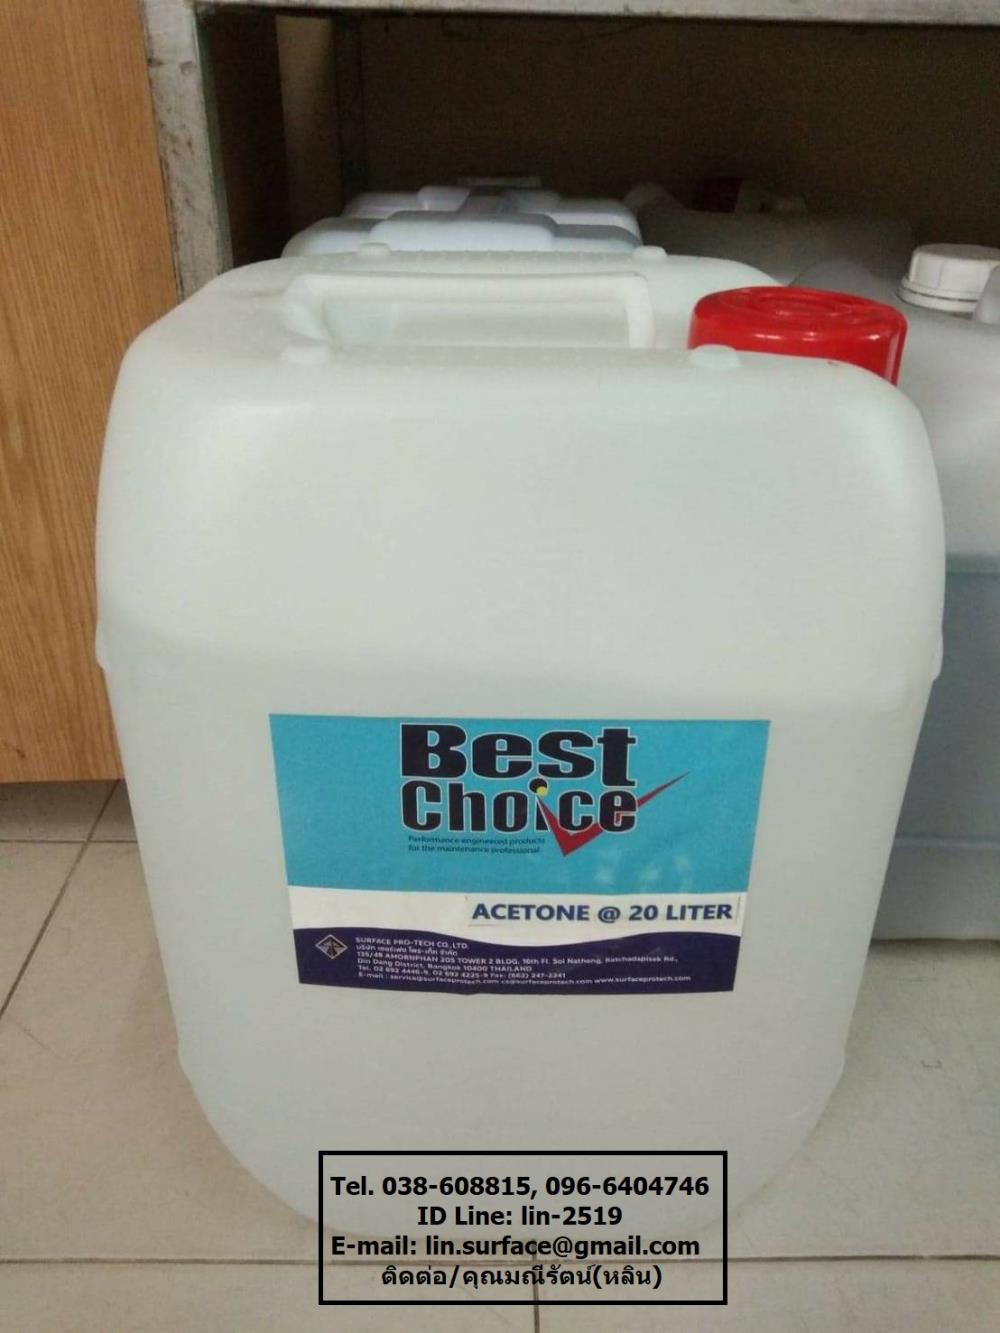 Best Choice Acetone น้ำยาอะซิโตน ใช้เป็นทินเนอร์สำหรับล้างเครื่องมือ ล้างคราบสี,น้ำยาอะซิโทน, น้ำยาล้างเครื่องมือ, น้ำยาล้างคราบสี, Acetone, Best Choice Acetone,Best Choice,Chemicals/Removers and Solvents